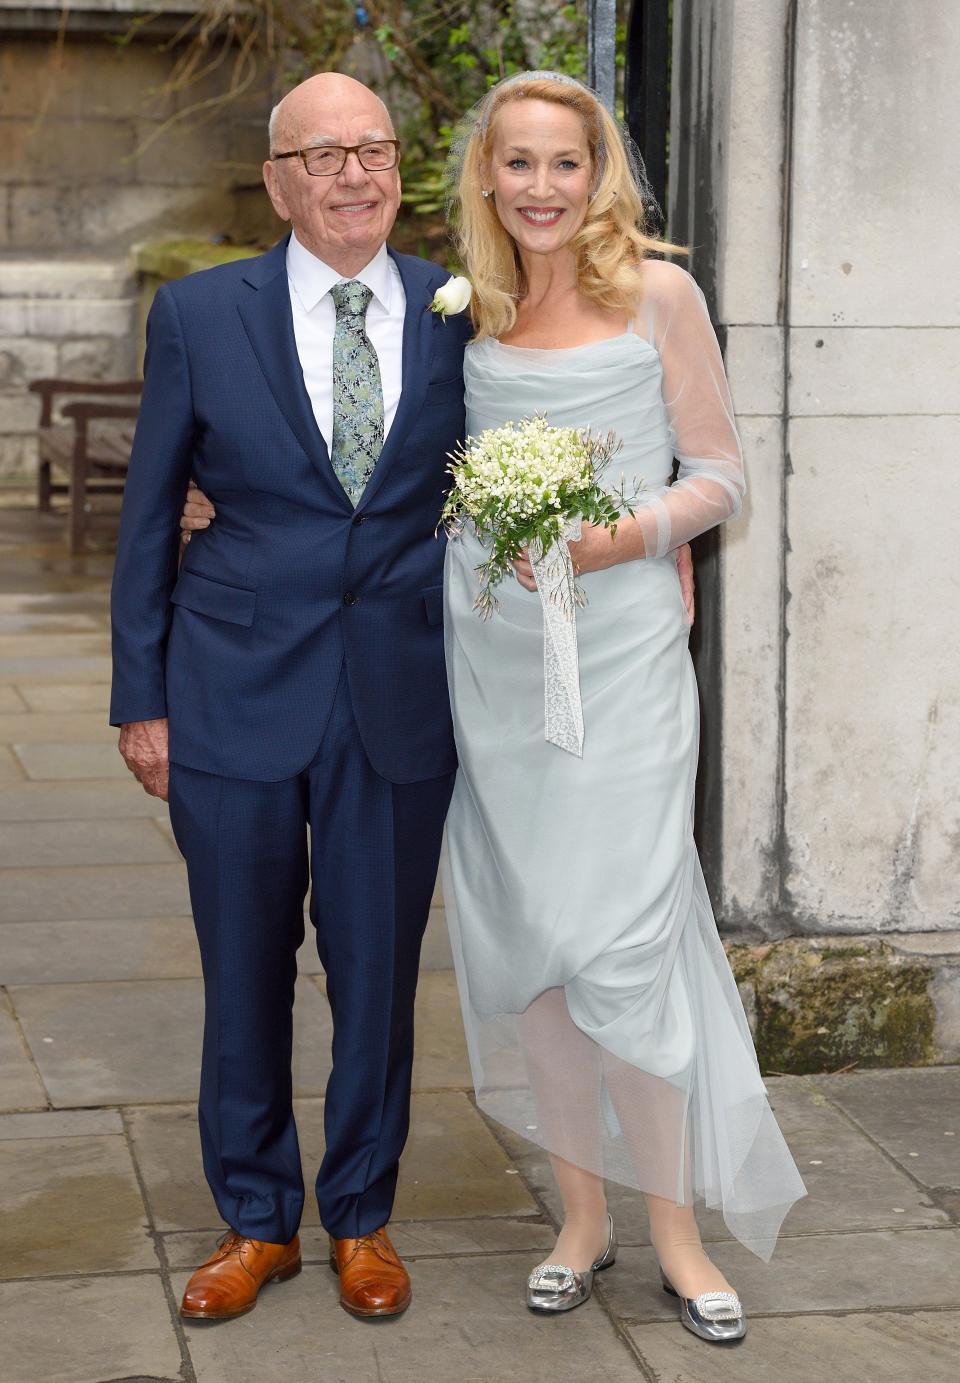 Jerry Hall and Rupert Murdoch got married in 2016.